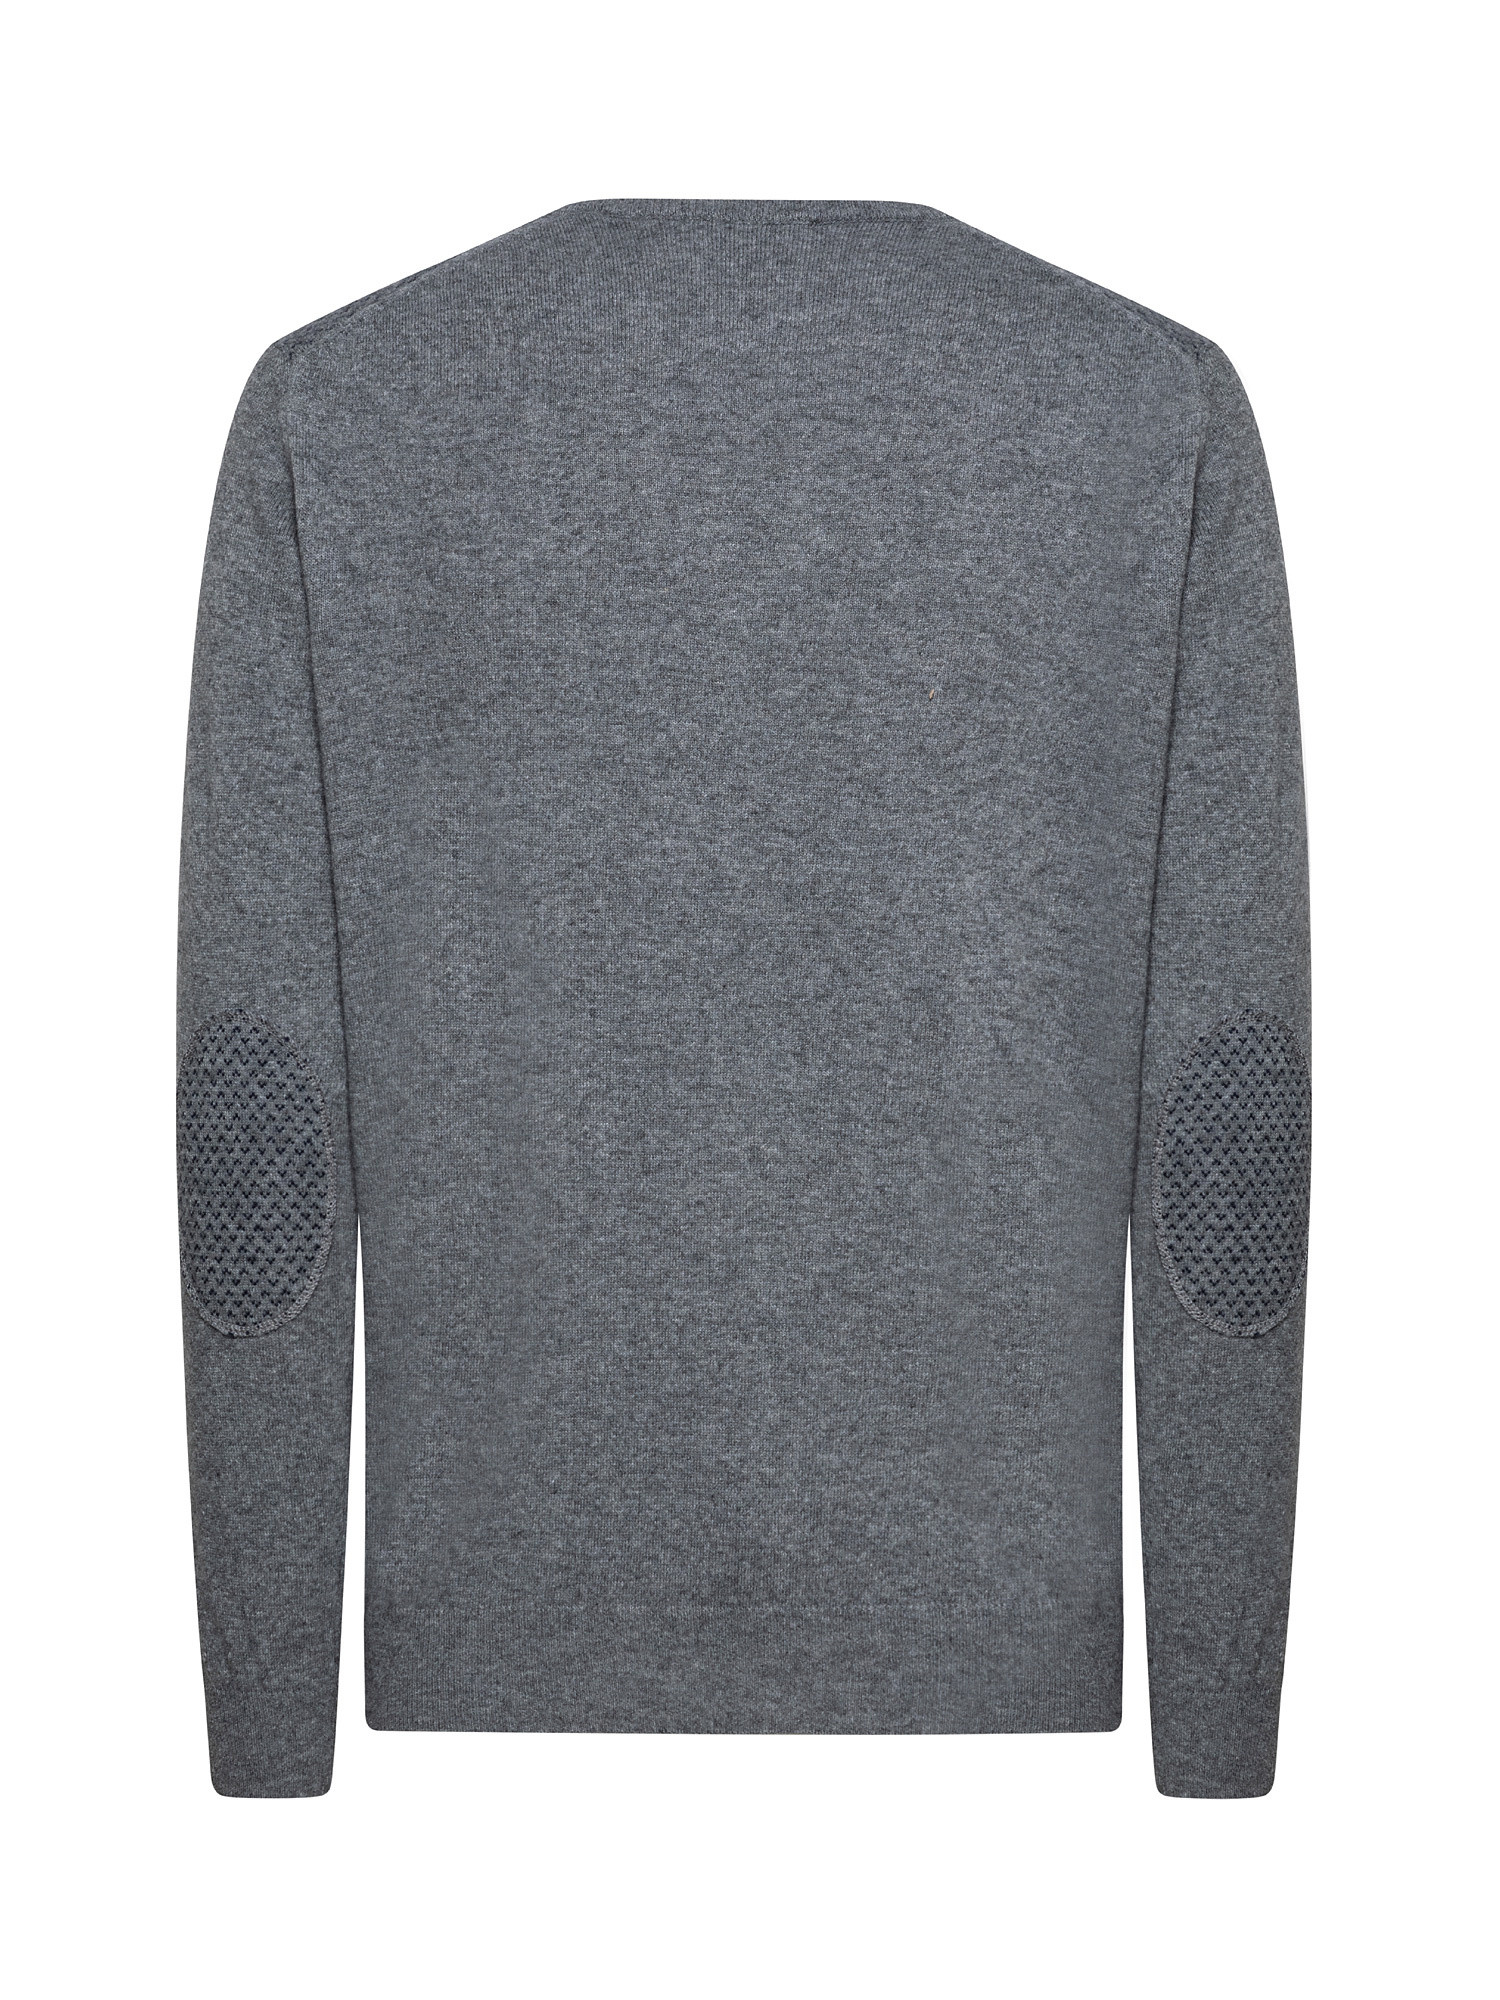 Basic crewneck pullover, Grey, large image number 1